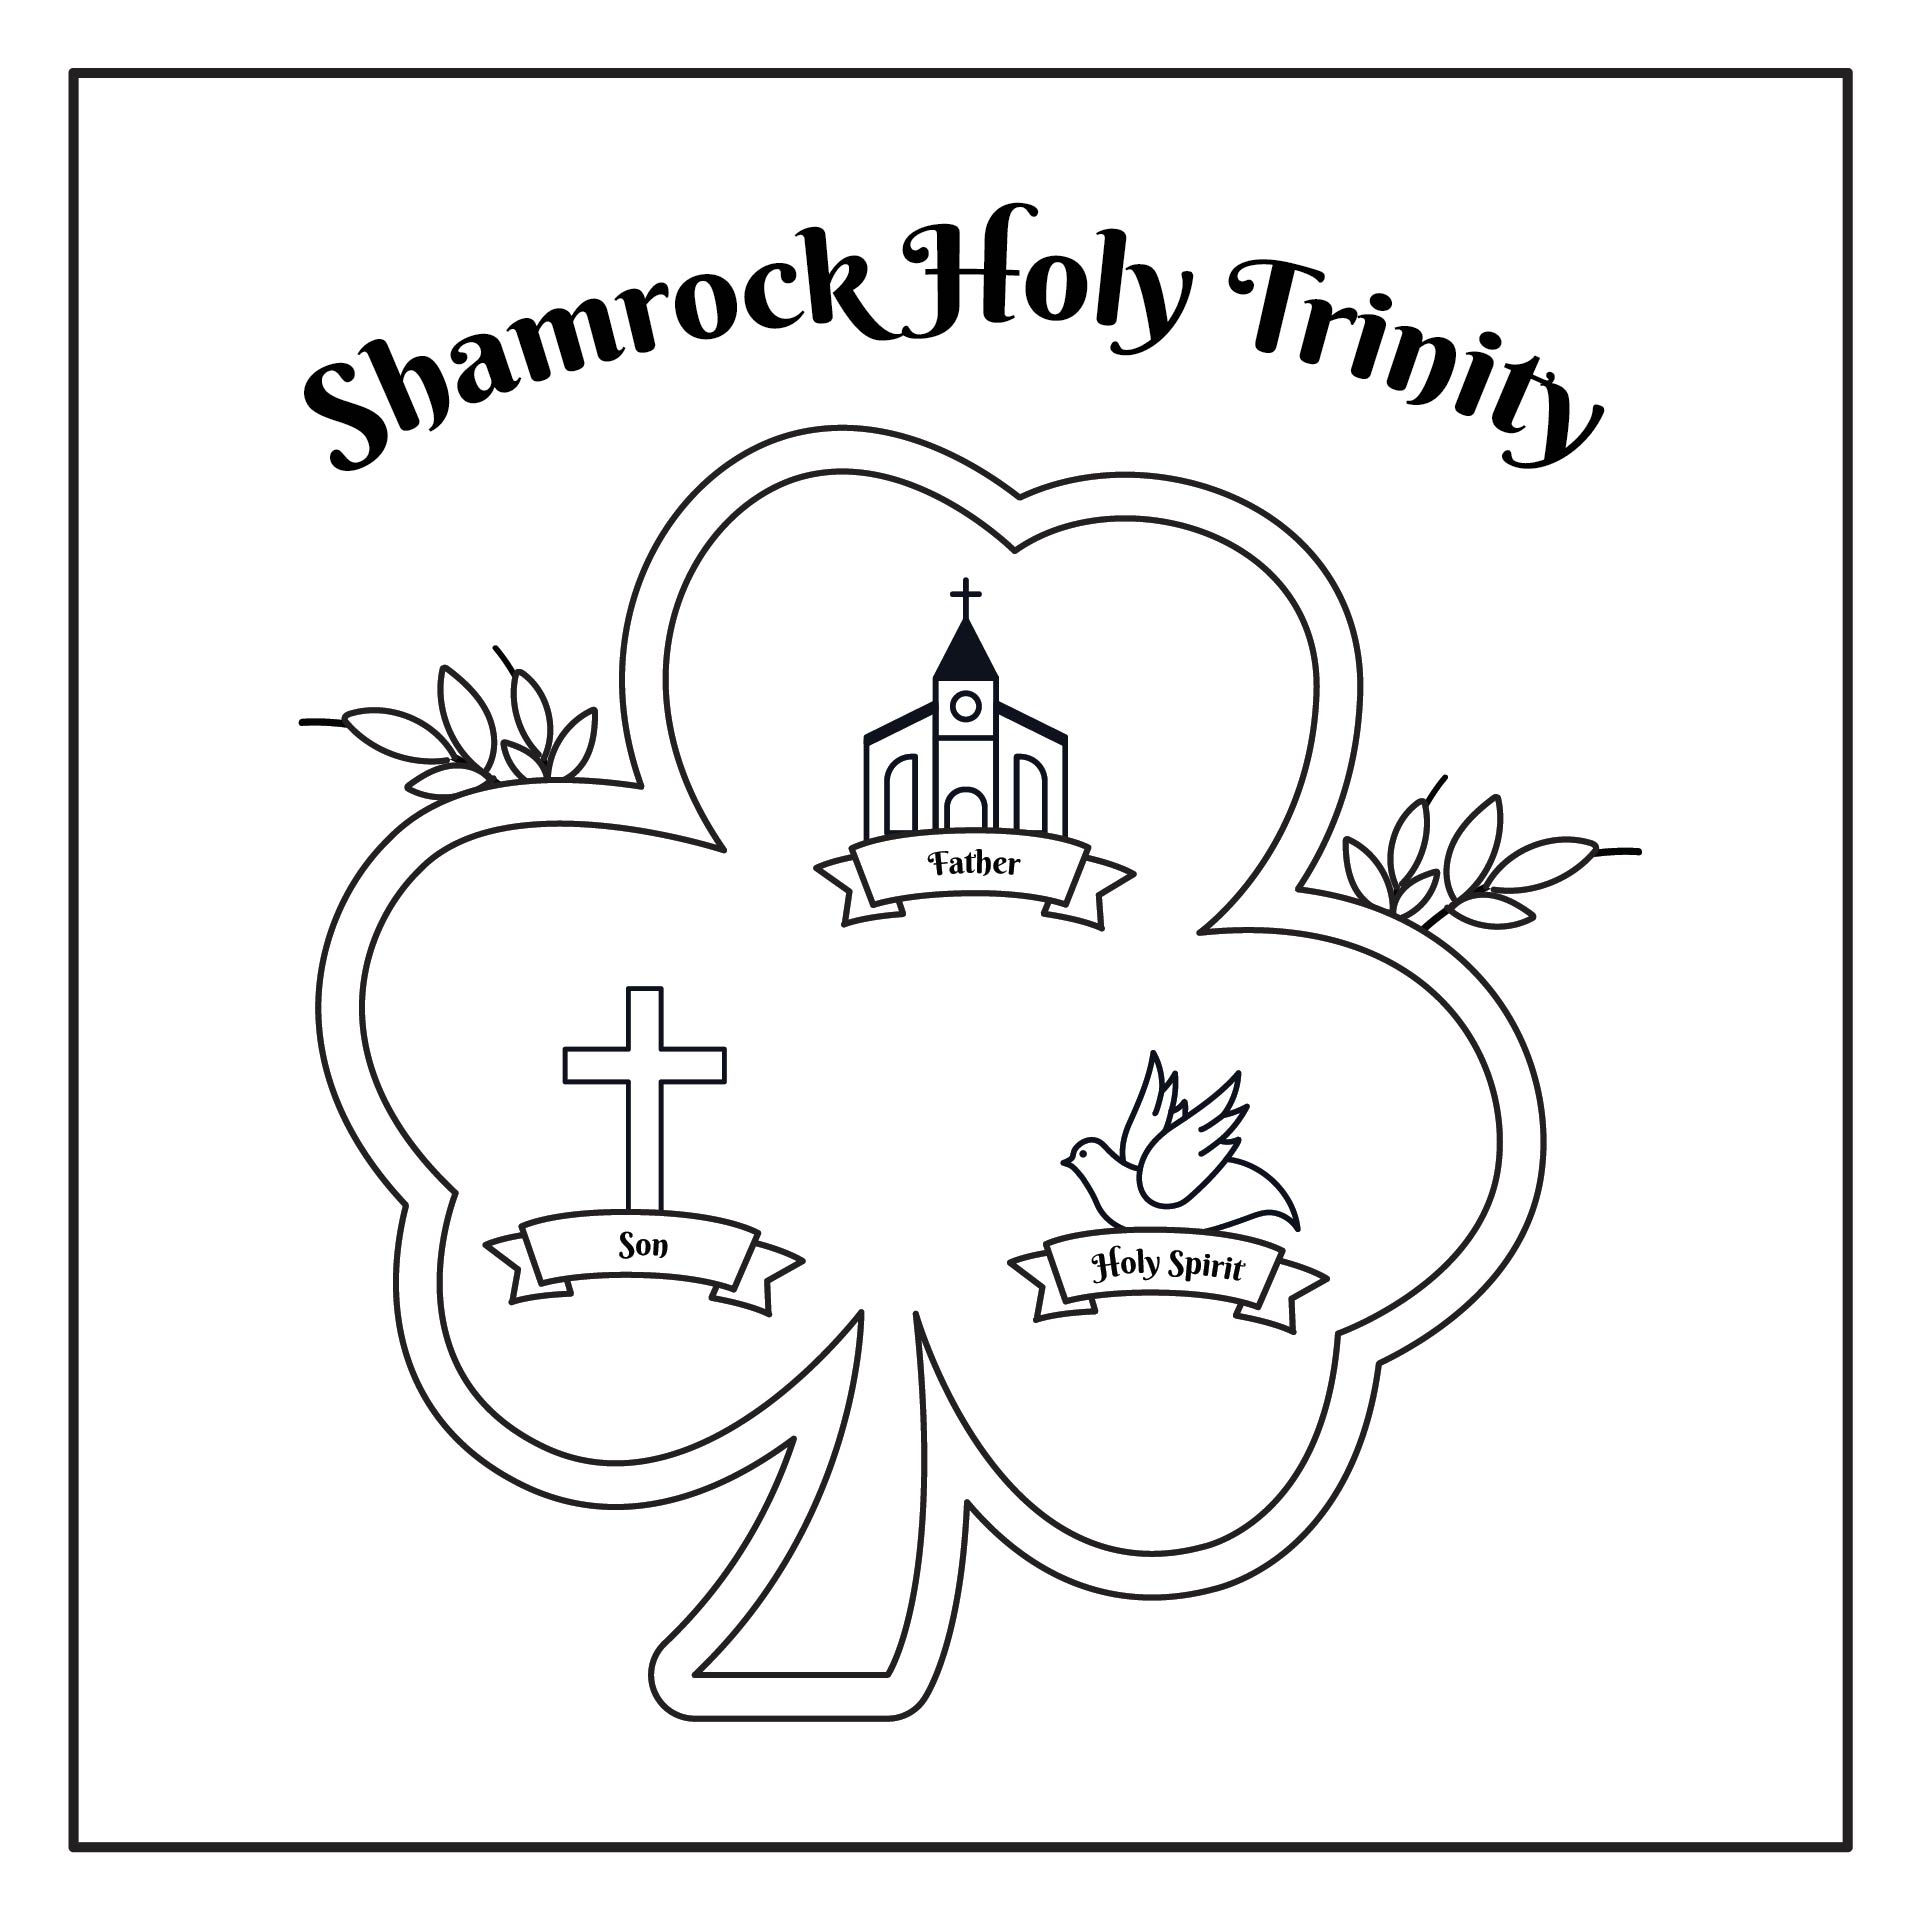 Shamrock Holy Trinity Coloring Page